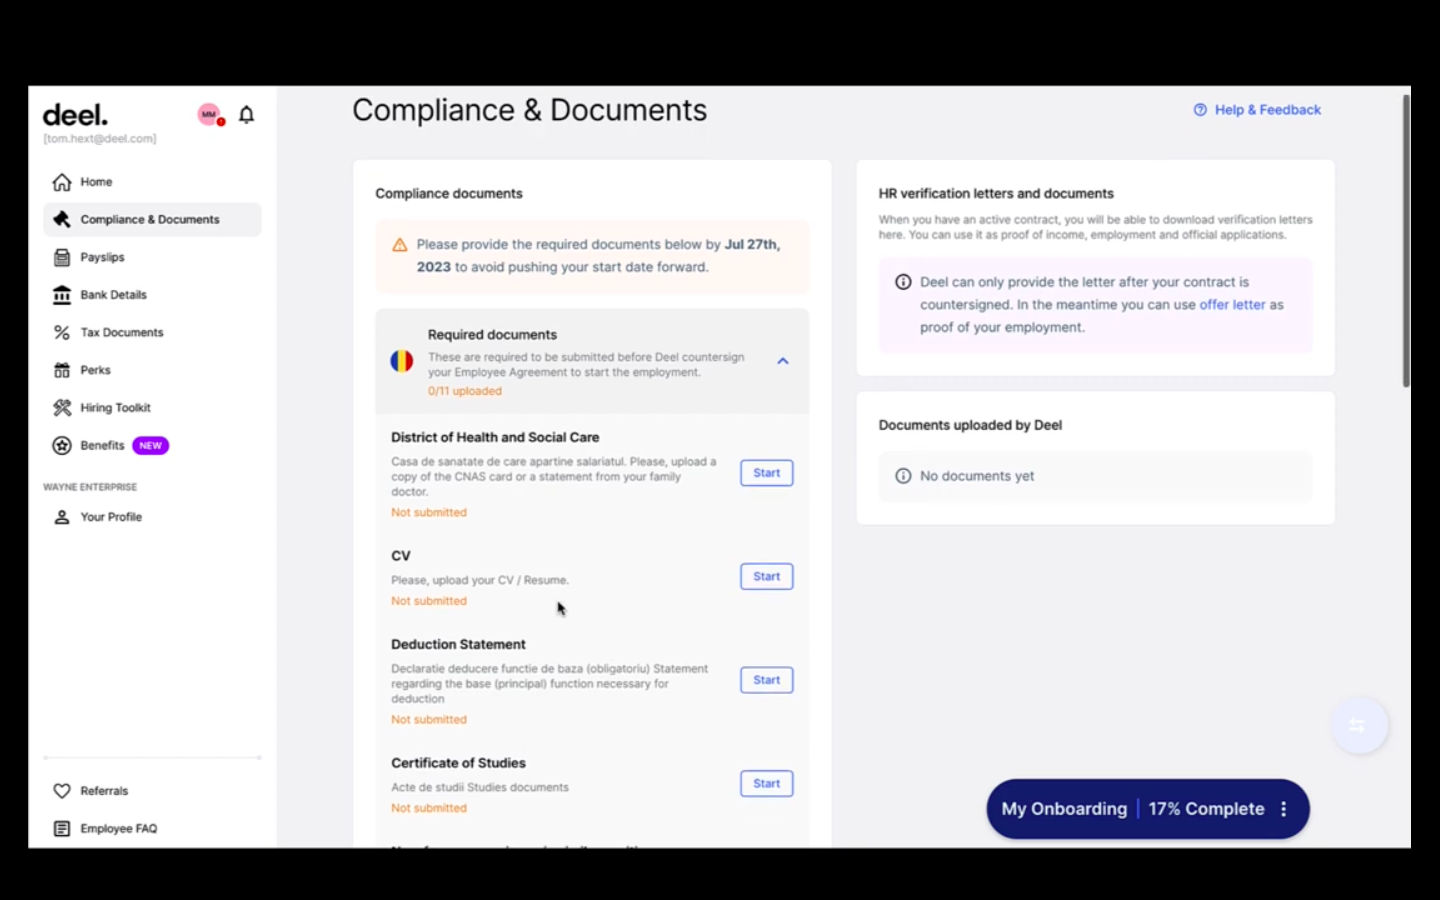 Compliance documents